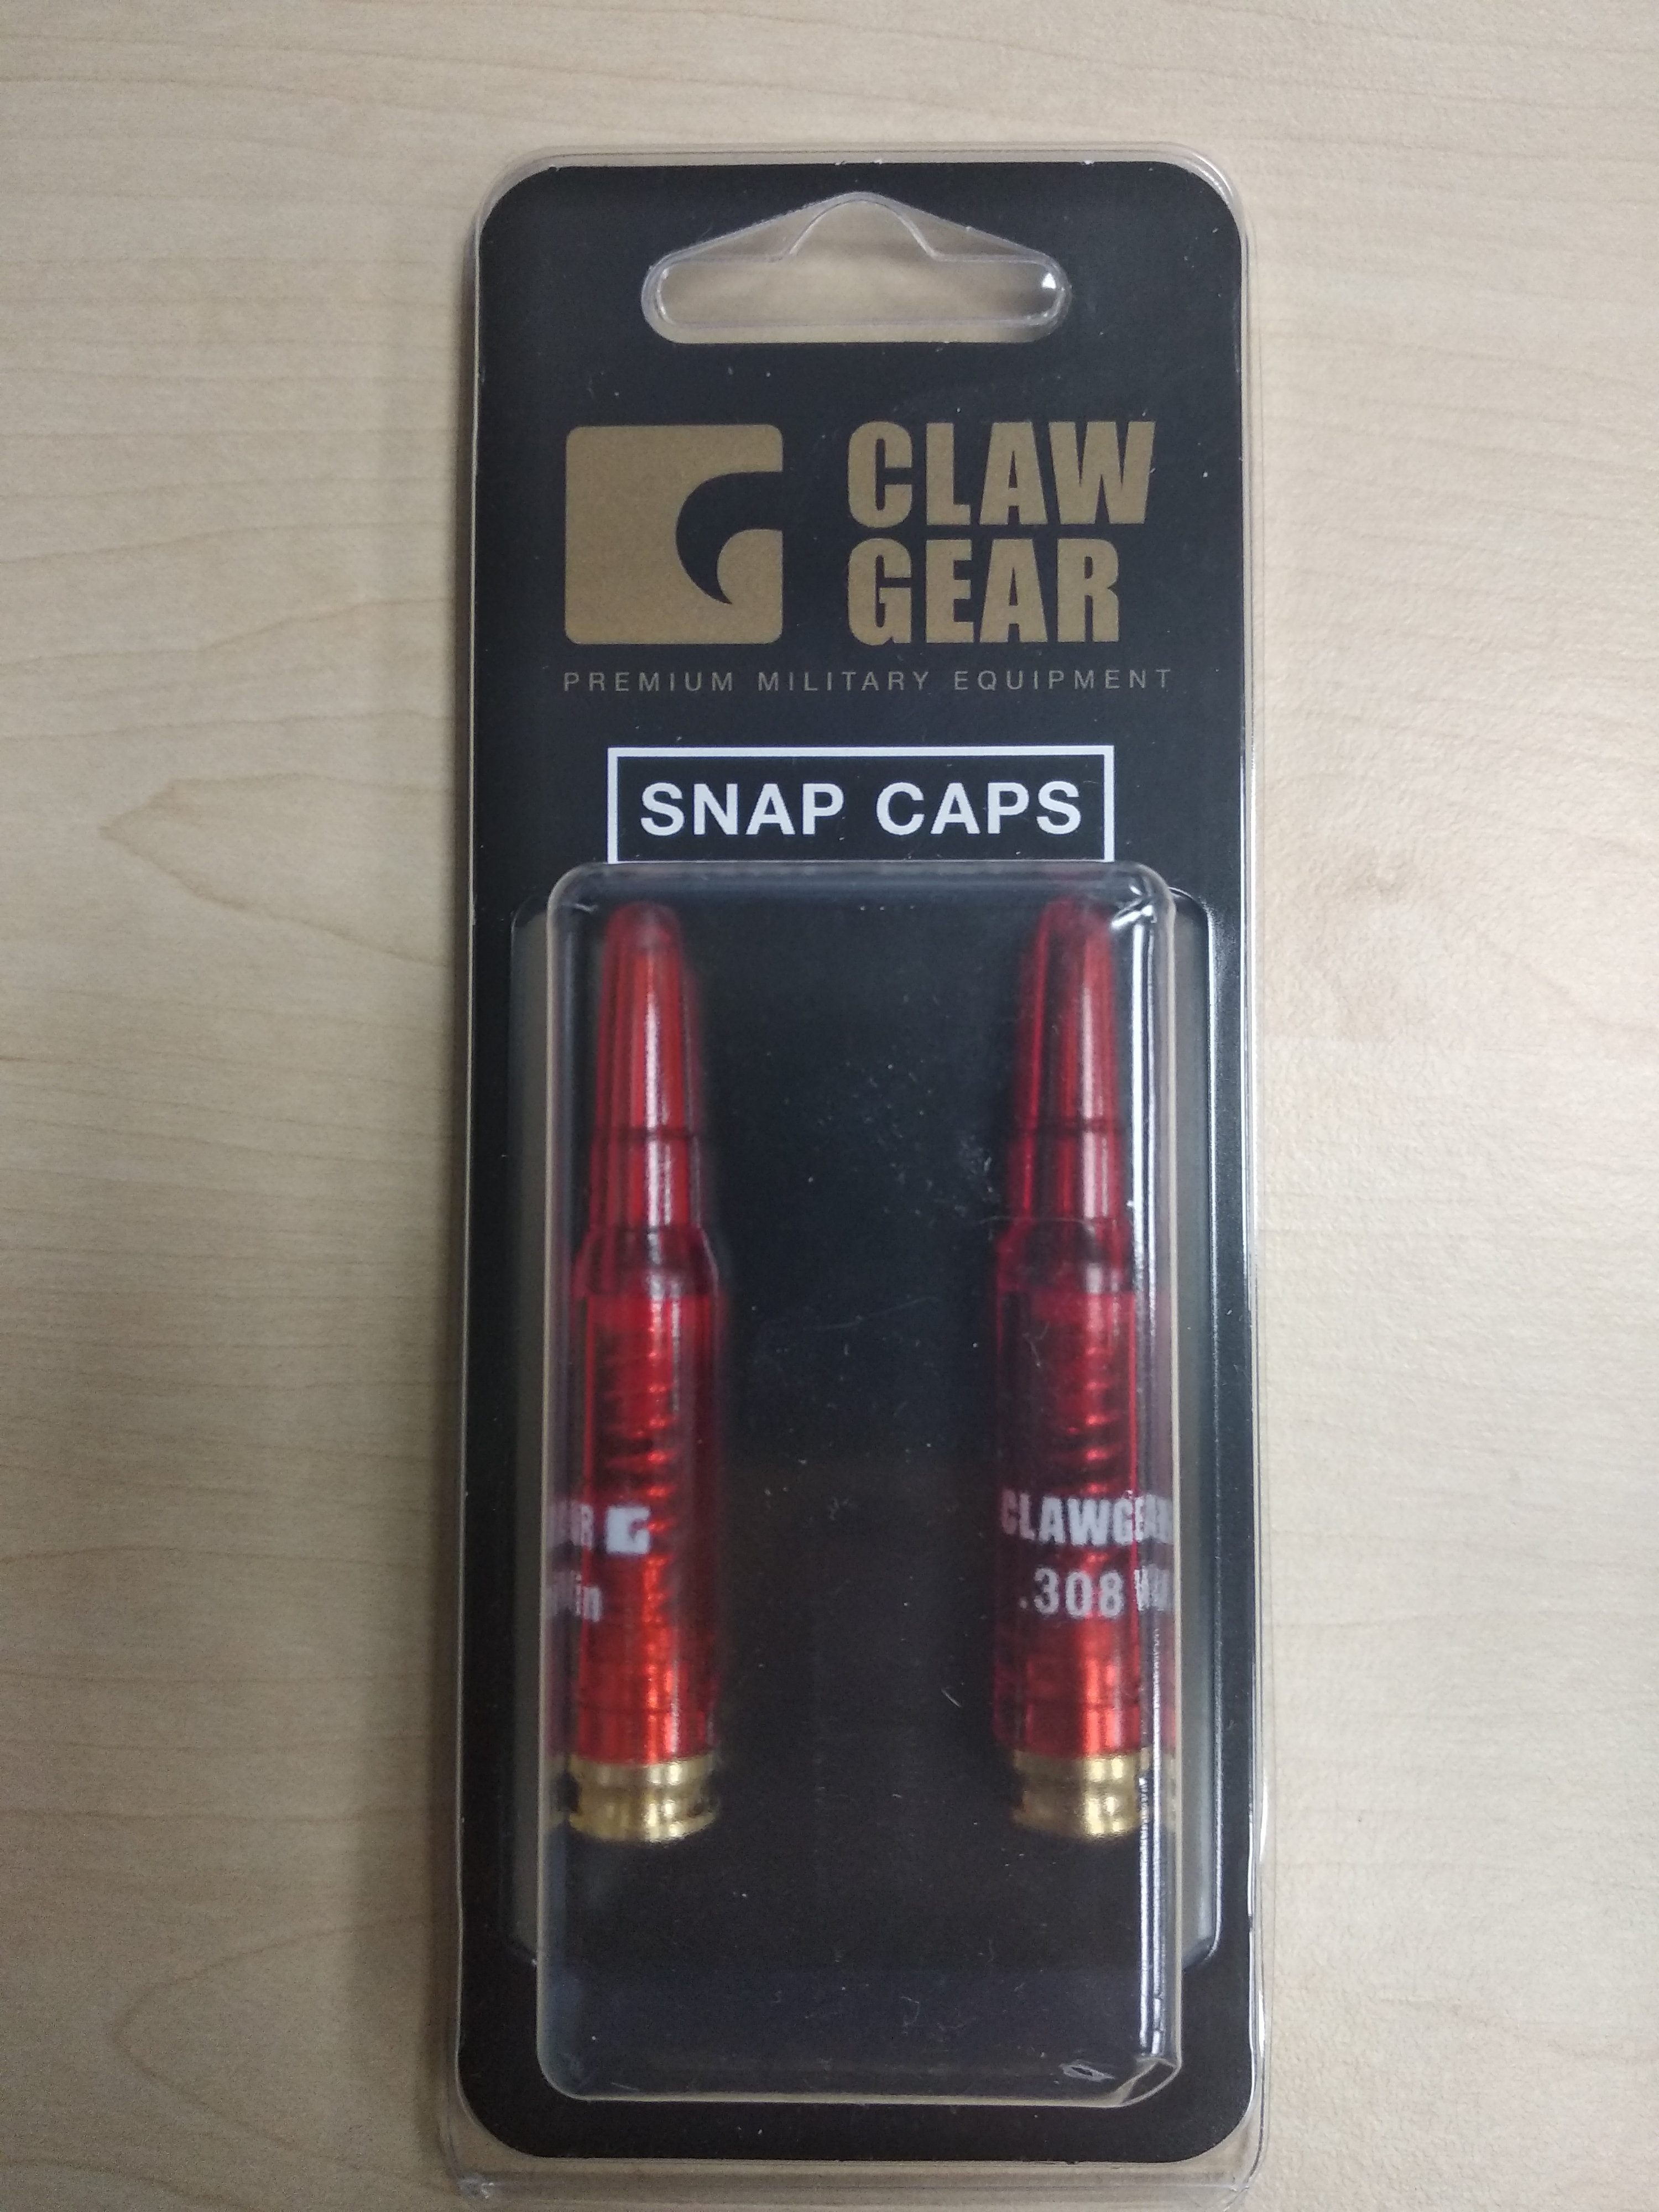 Clawgear Cvičné střelivo .308 Win, snap caps